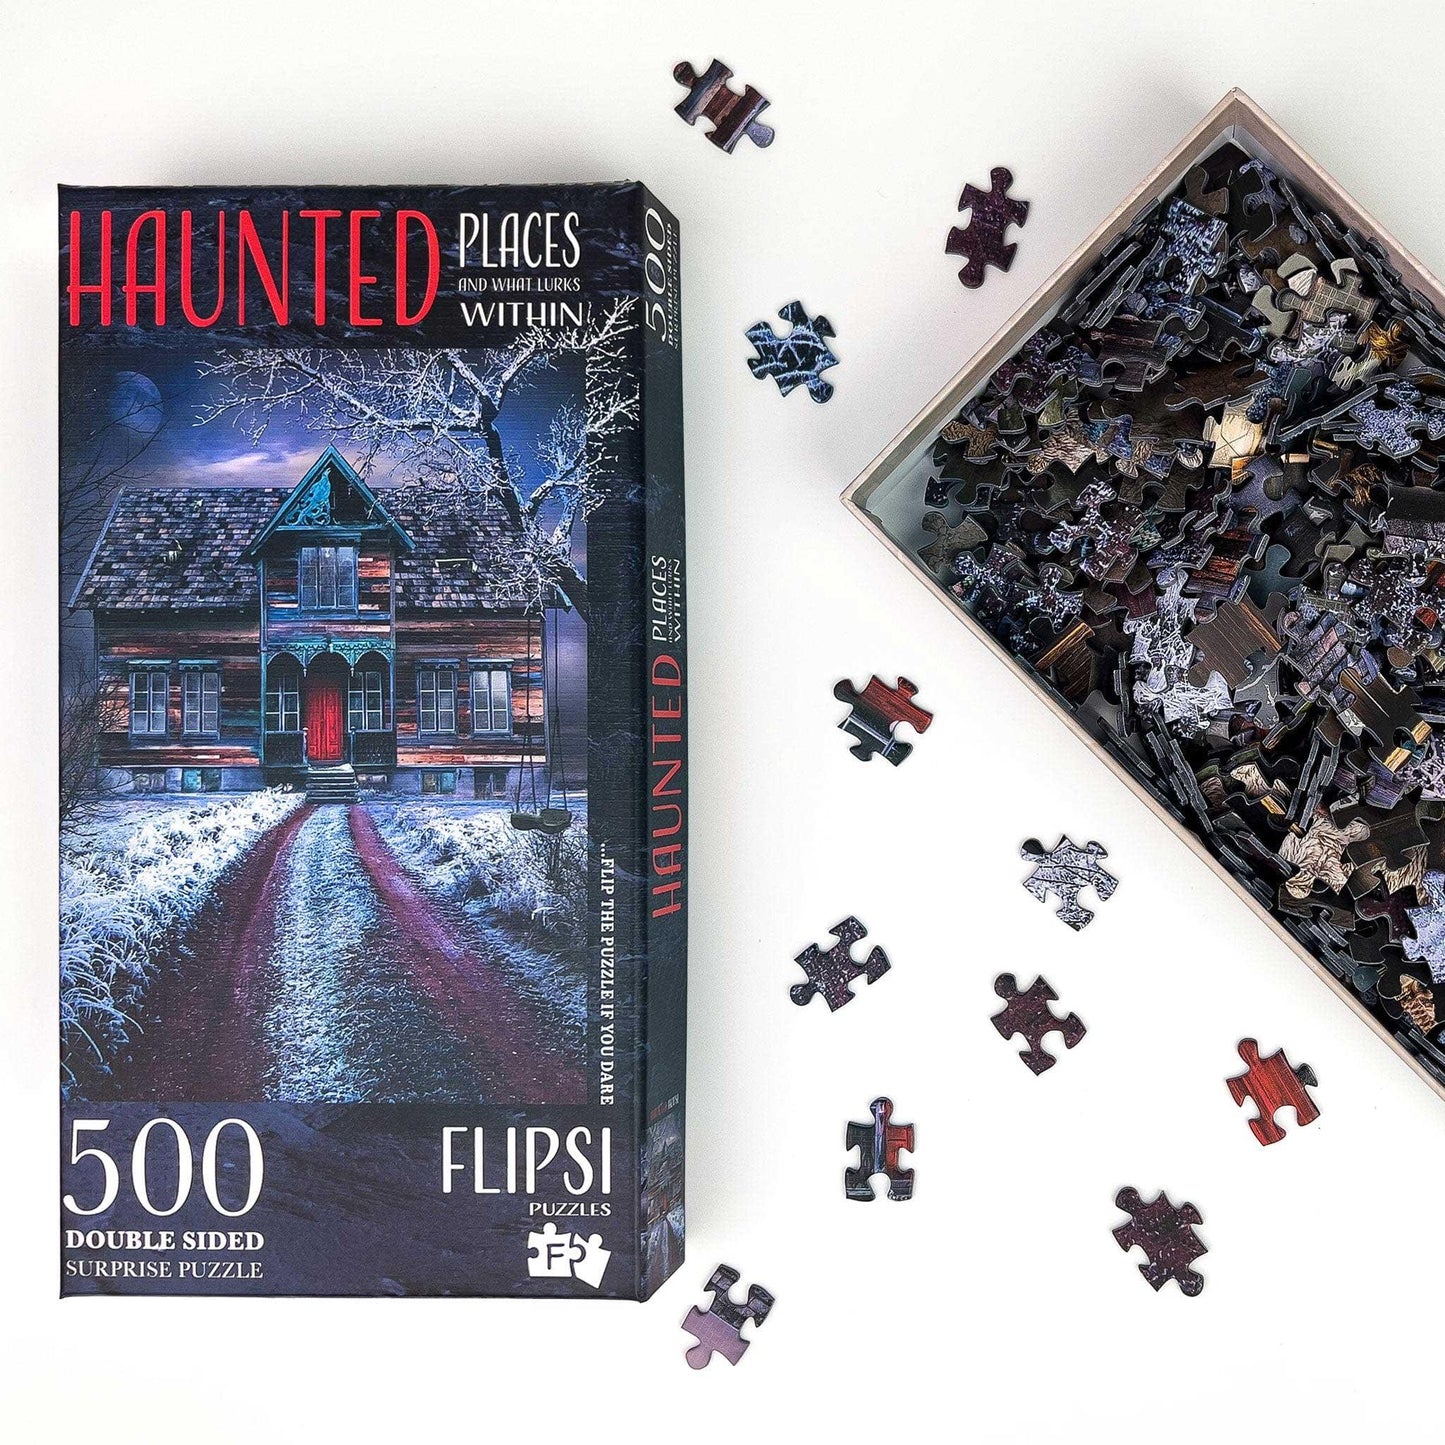 PRE-ORDER FLIPSI PLUS: All Three Haunted Places & Flipsi Board - Flipsi Puzzles